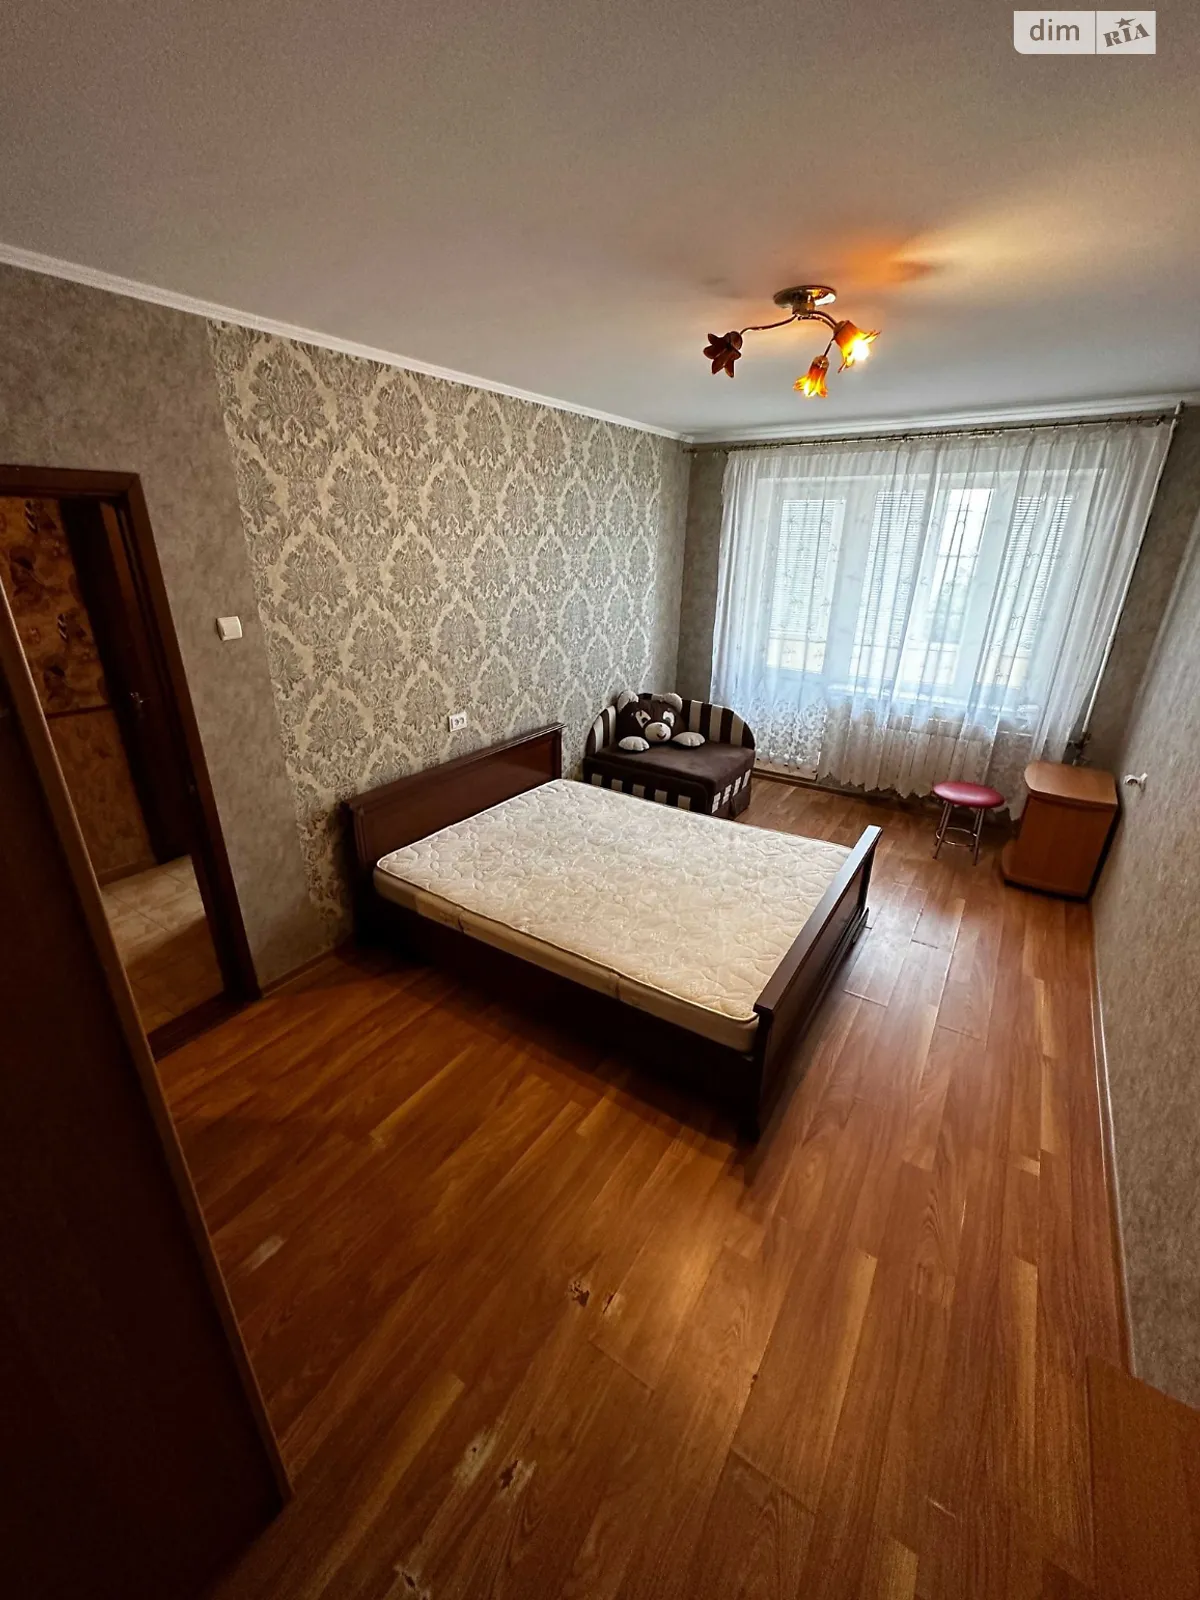 1-кімнатна квартира 39 кв. м у Луцьку, вул. Кравчука - фото 1